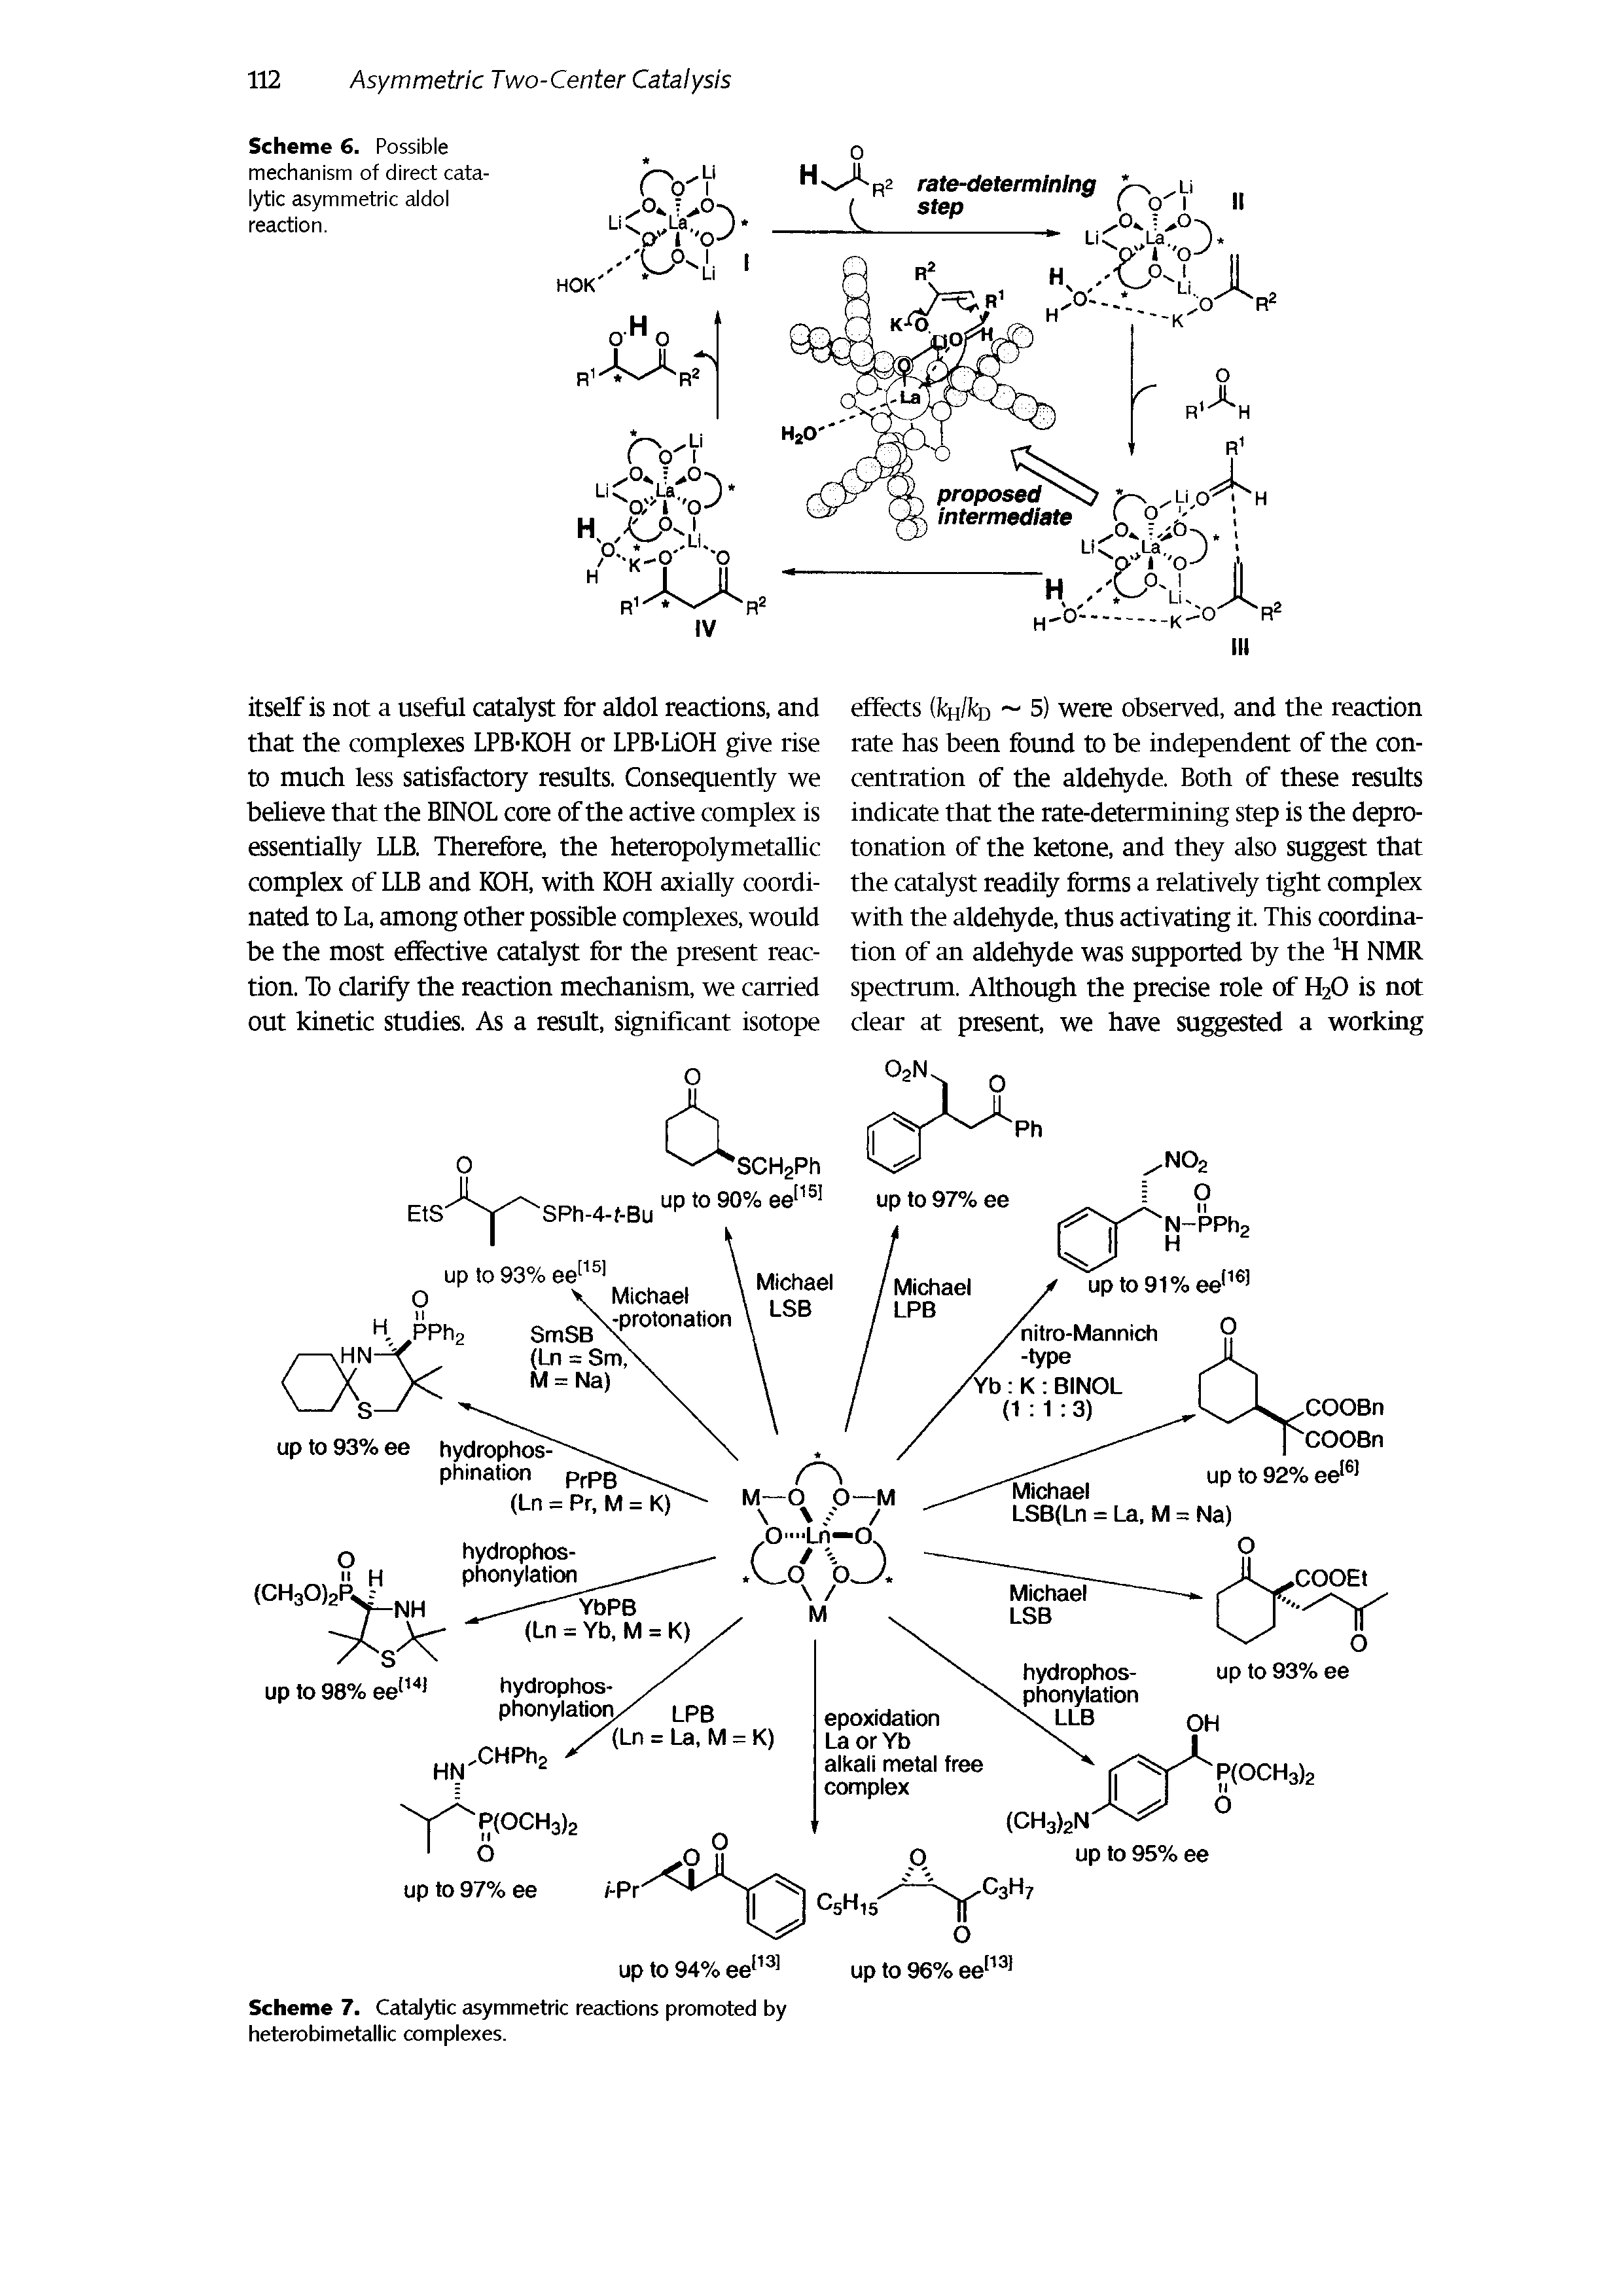 Scheme 7. Catalytic asymmetric reactions promoted by heterobimetallic complexes.